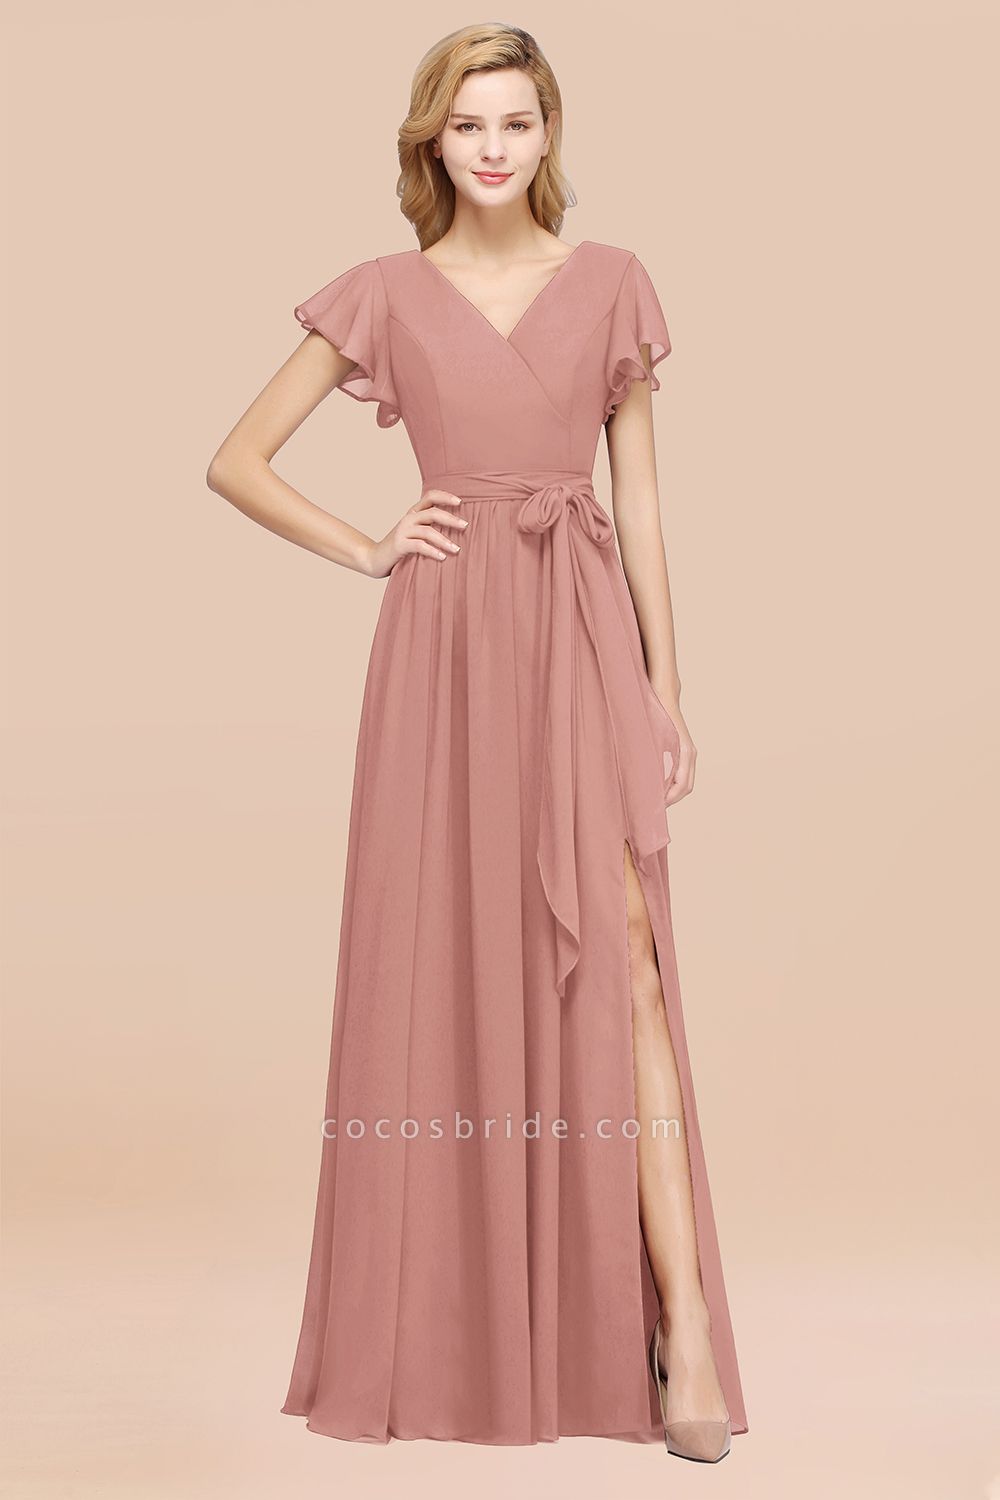 elegant A-line Chiffon V-Neck Short-Sleeves Floor-Length Bridesmaid Dresses with Bow Sash